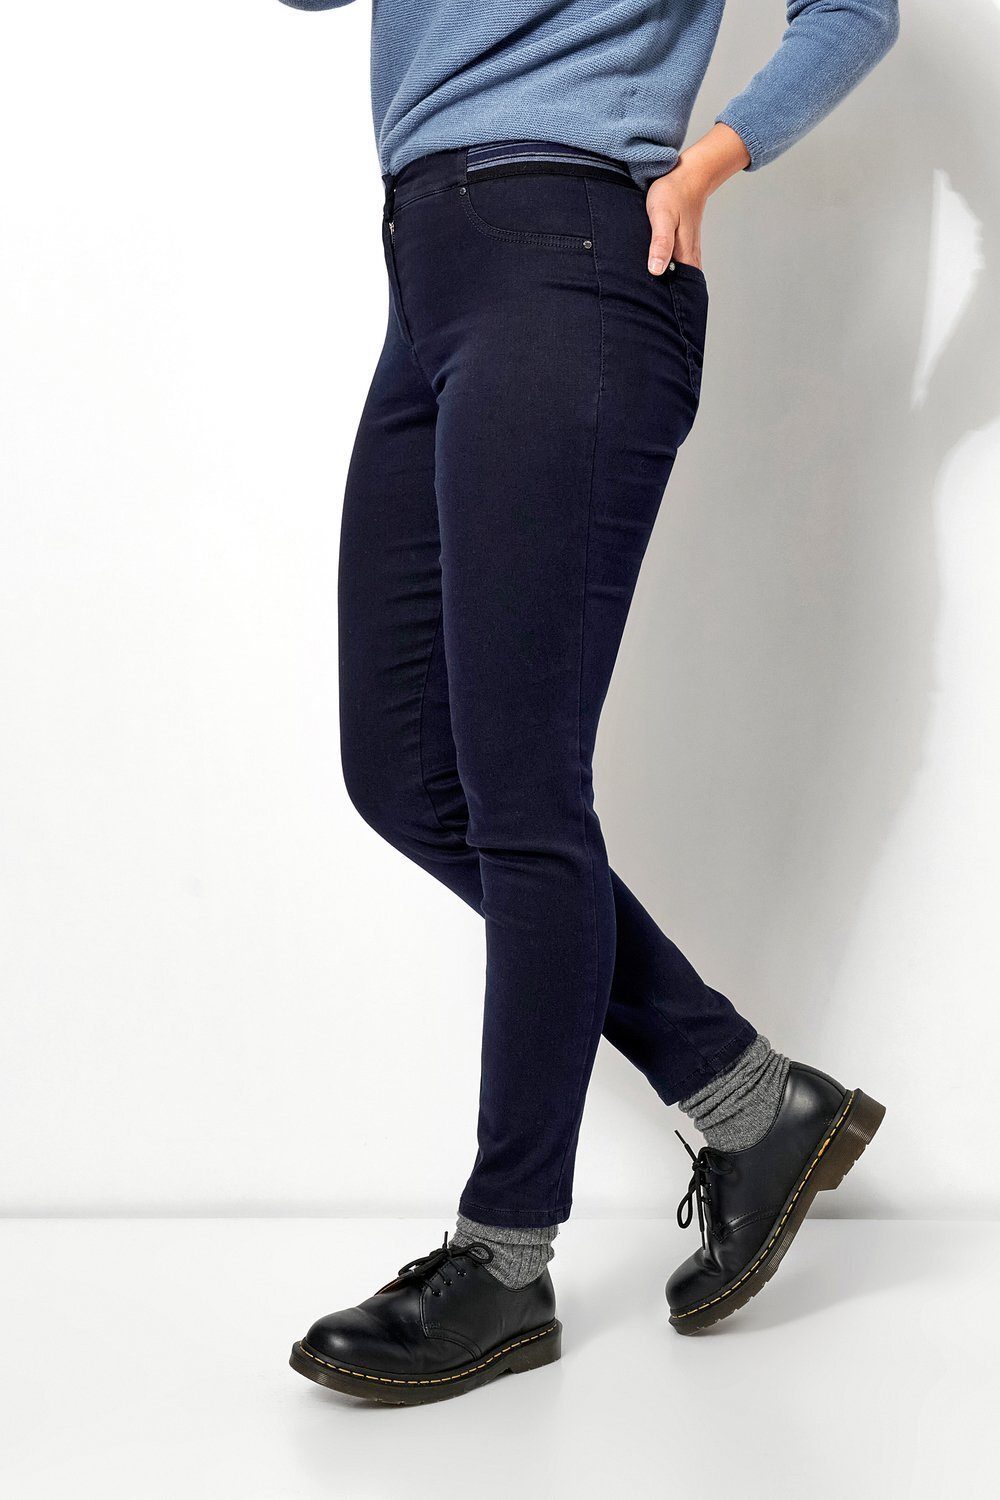 TONI Ankle-Jeans Jenny mit gestreiftem Gummizug dunkelblau - 590